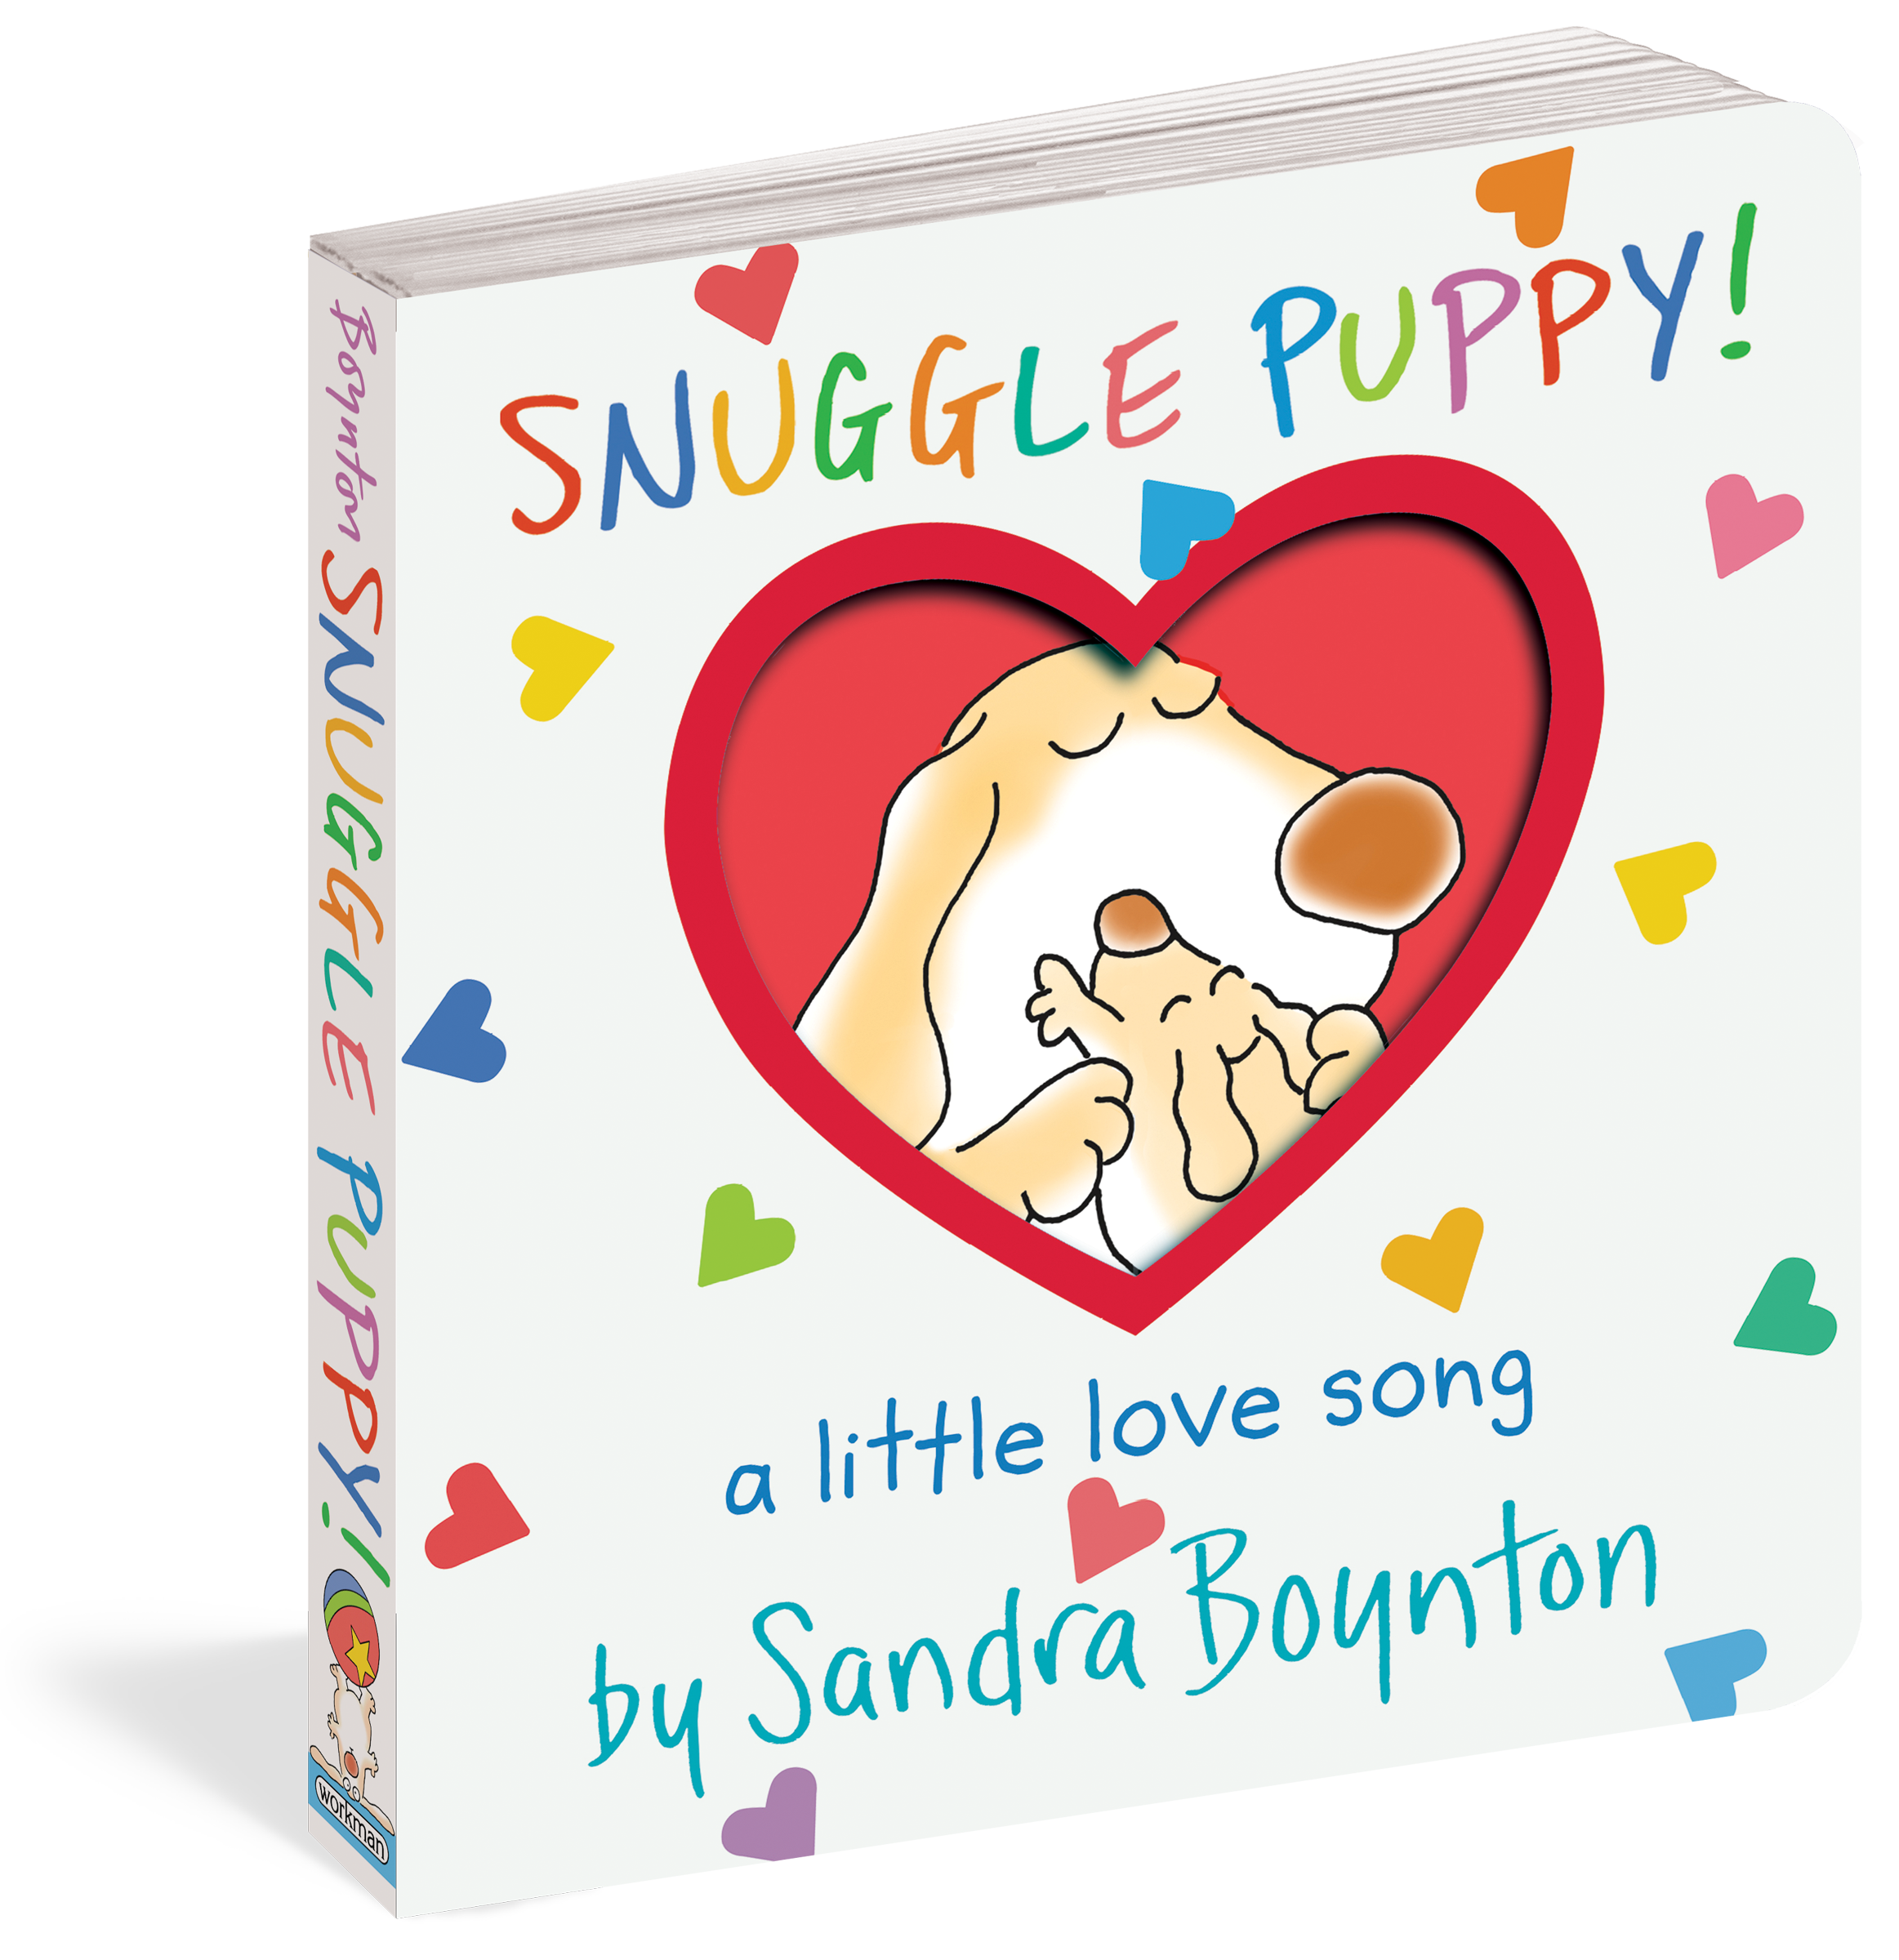 Boynton: Snuggle Puppy